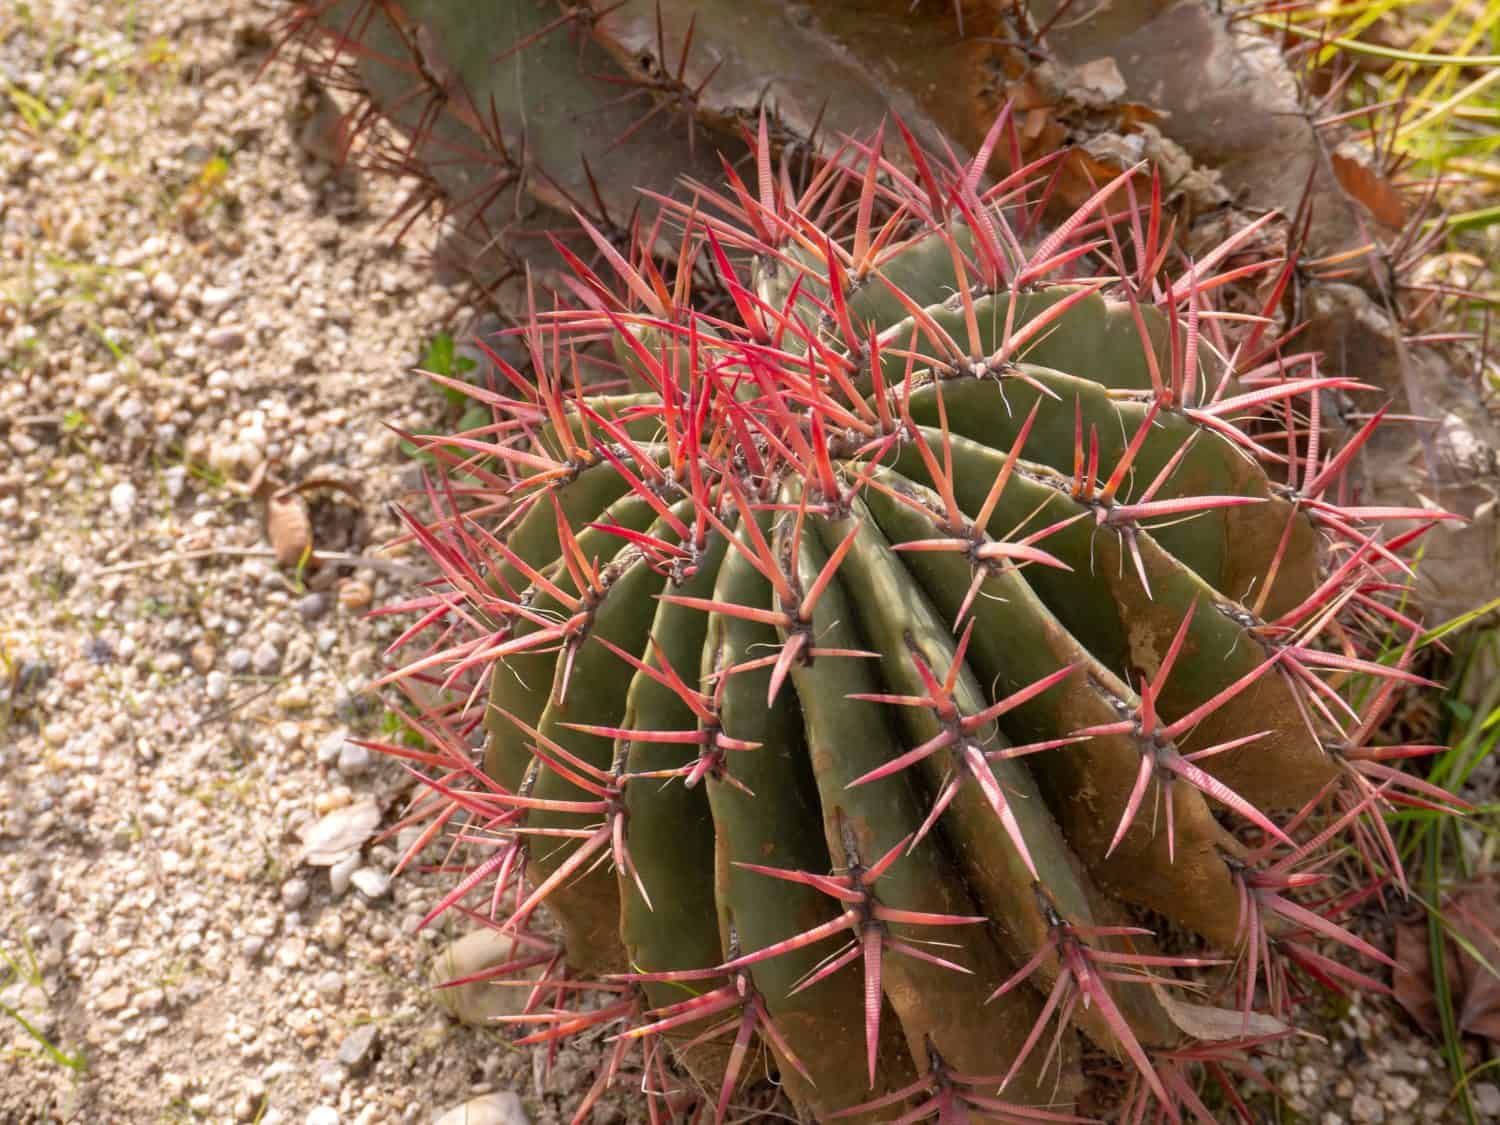 Pianta succulenta messicana Fire Barrel Cactus o ferocactus pringlei con spine rosse luminose